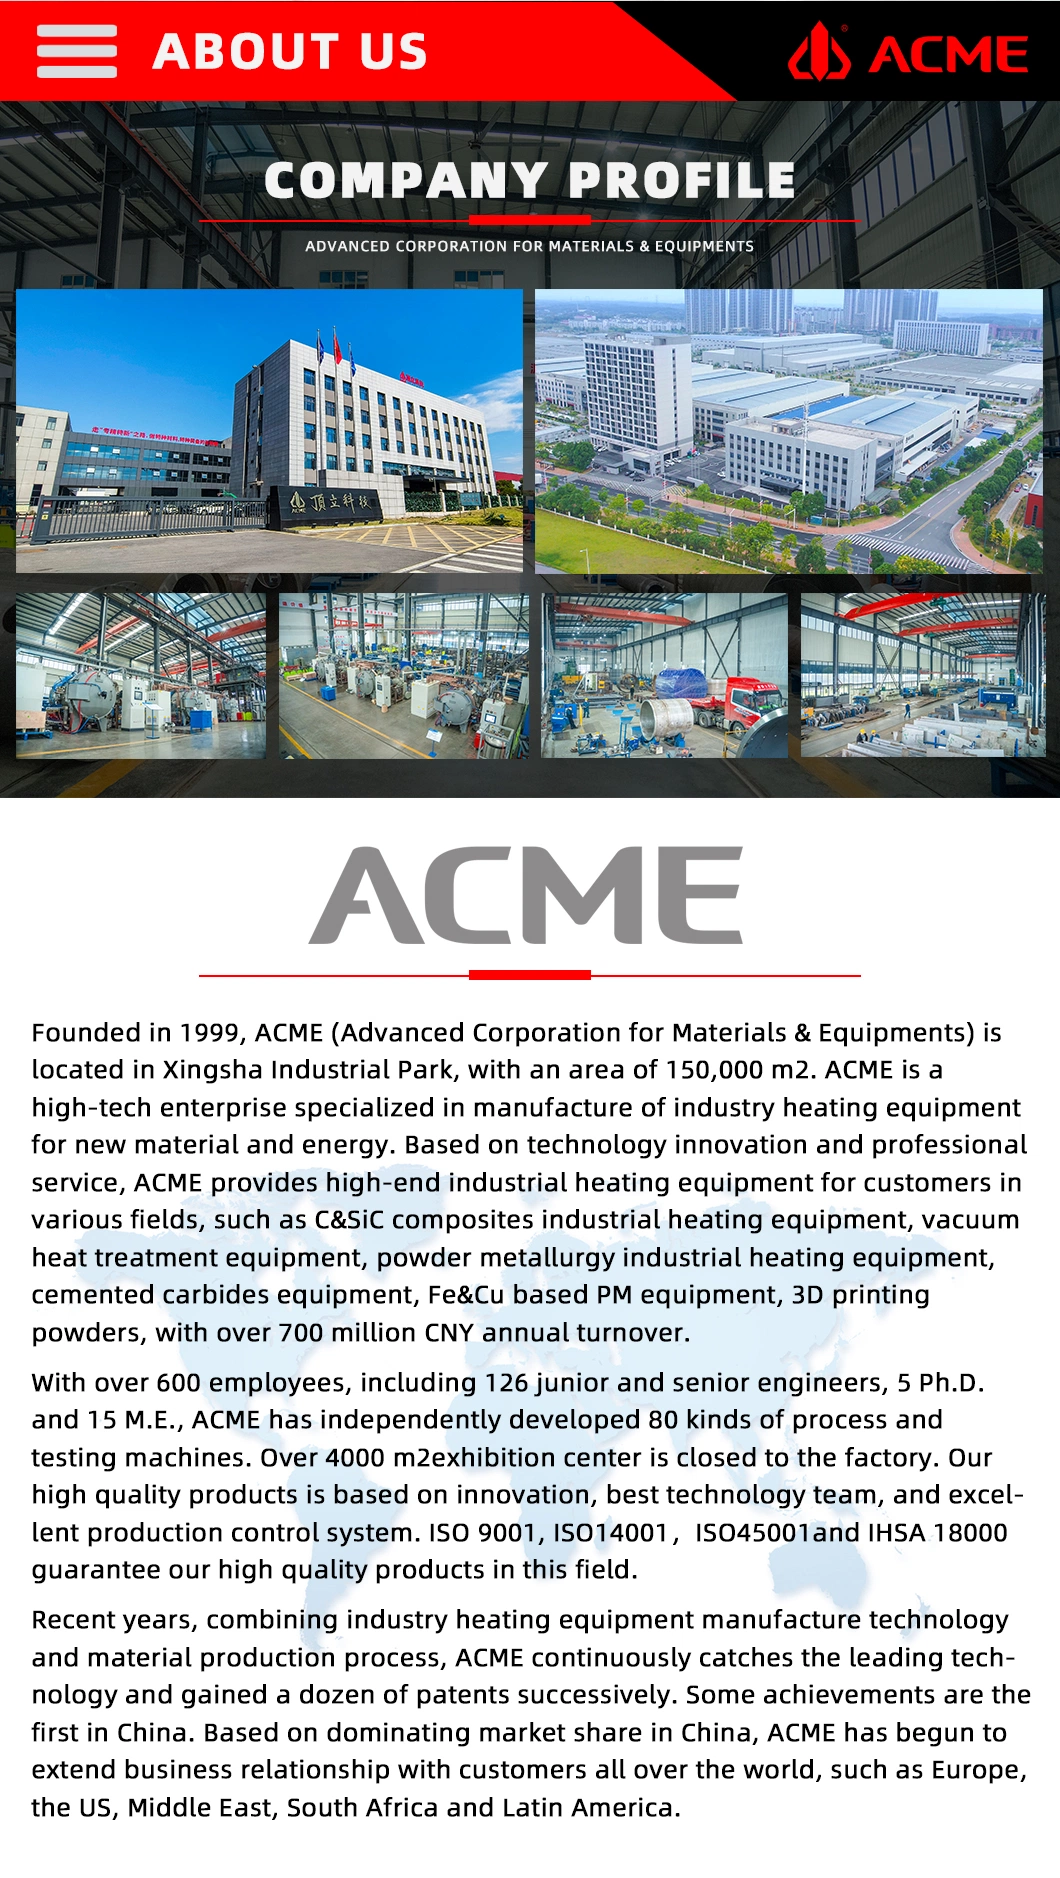 Acme Vacuum Hydrogen Furnace Source Plant, Vertical Vacuum Annealing Furnace